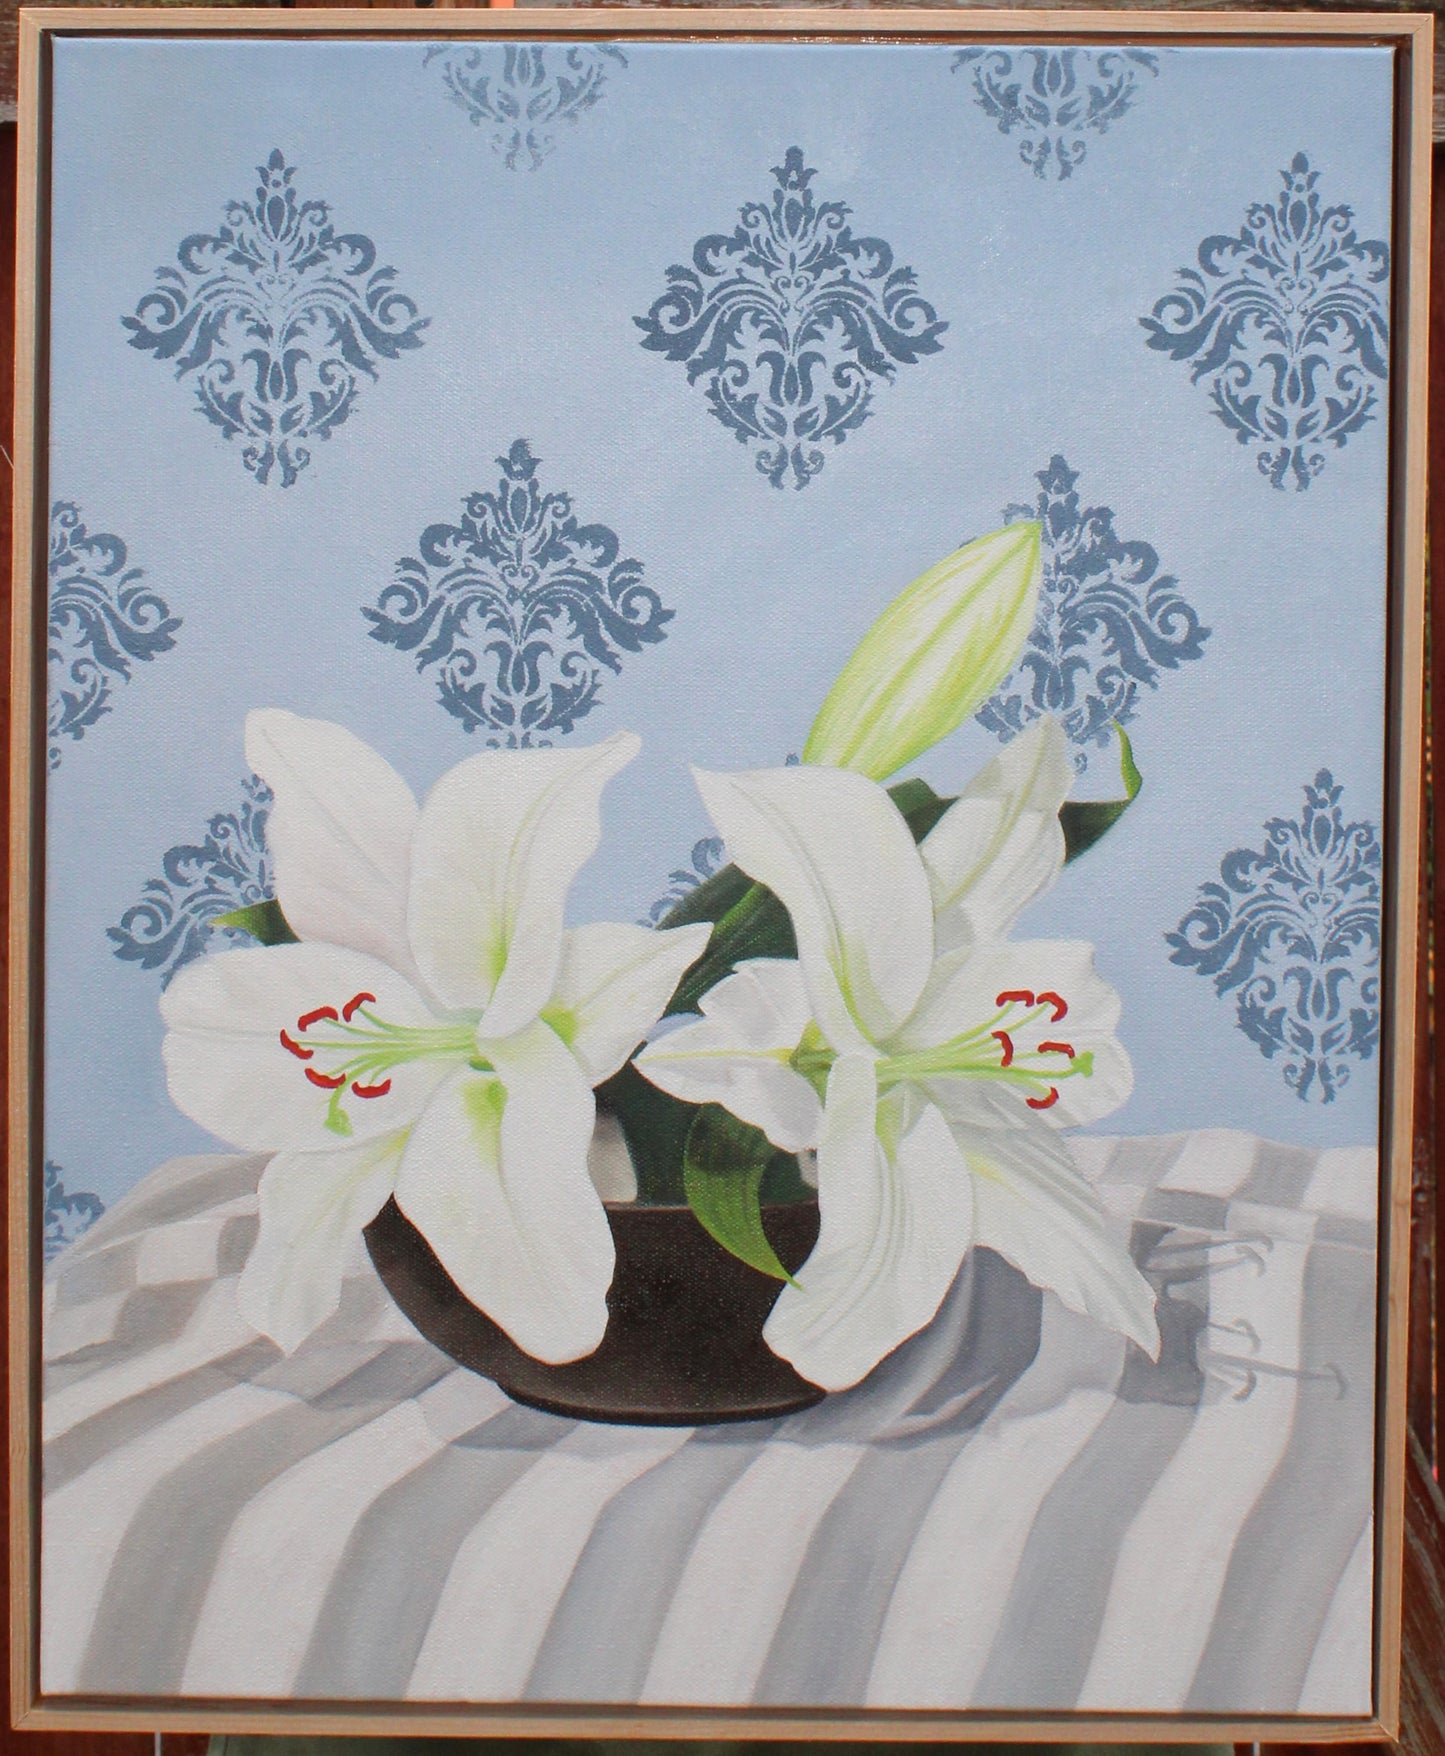 Breathe of fresh lily - Original Oil Painting by Shobika